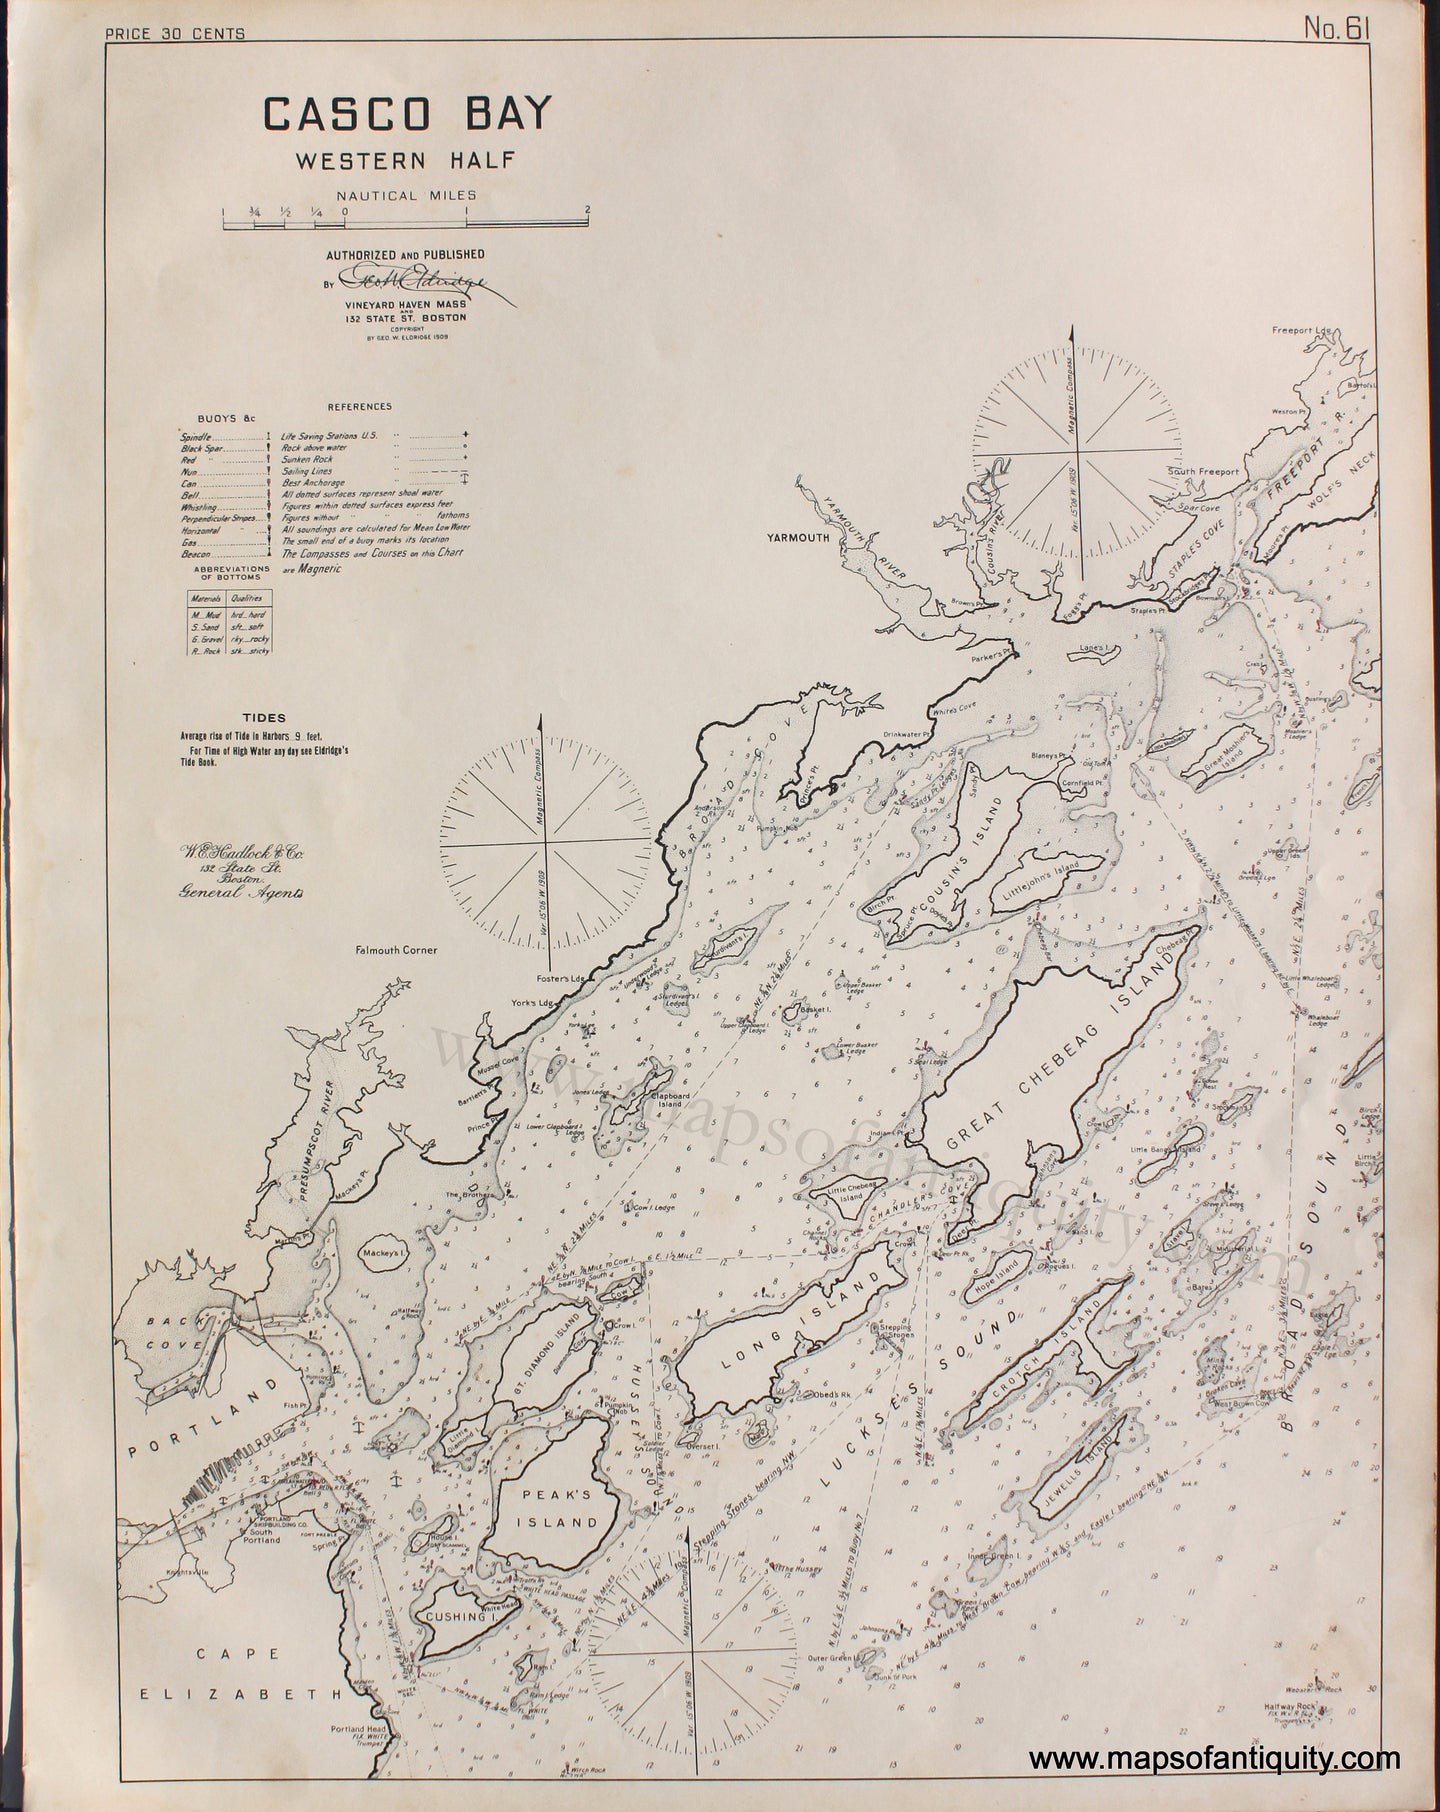 Black-and-White-Antique-Nautical-Chart-Casco-Bay-Western-Half-United-States-Northeast-1909-Eldridge-Maps-Of-Antiquity